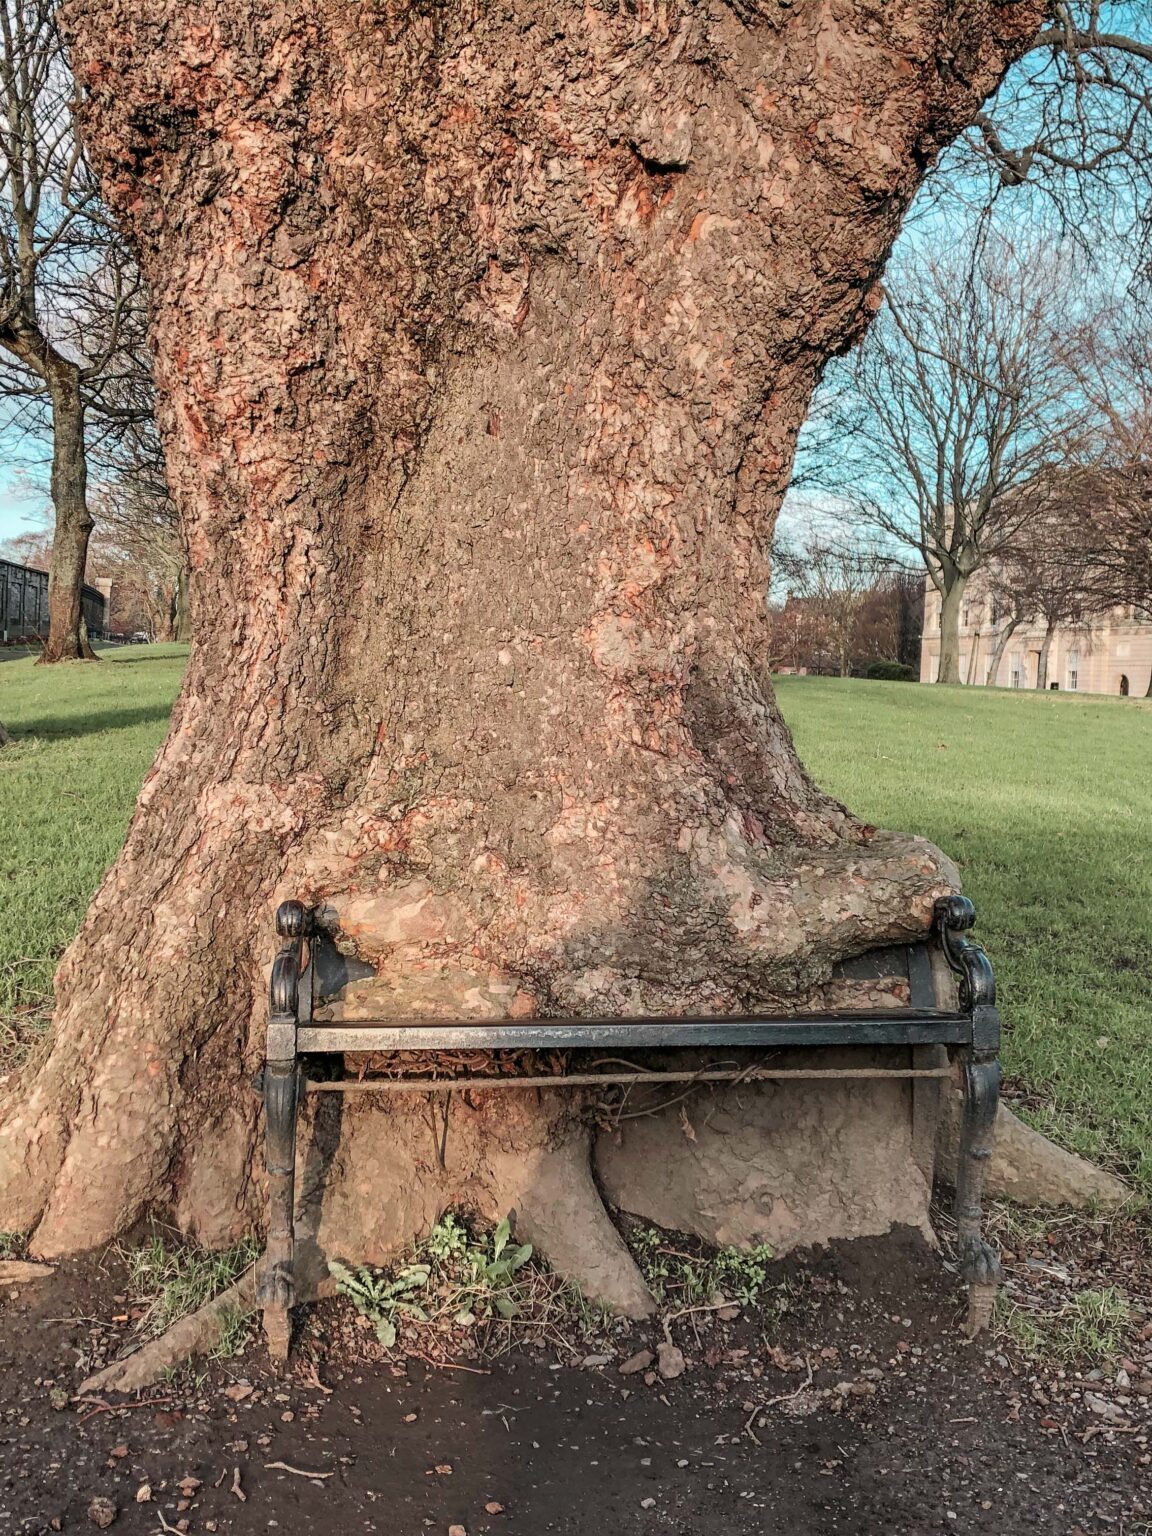 The Hungry Tree, King's Inn Park, Dublin, Ireland